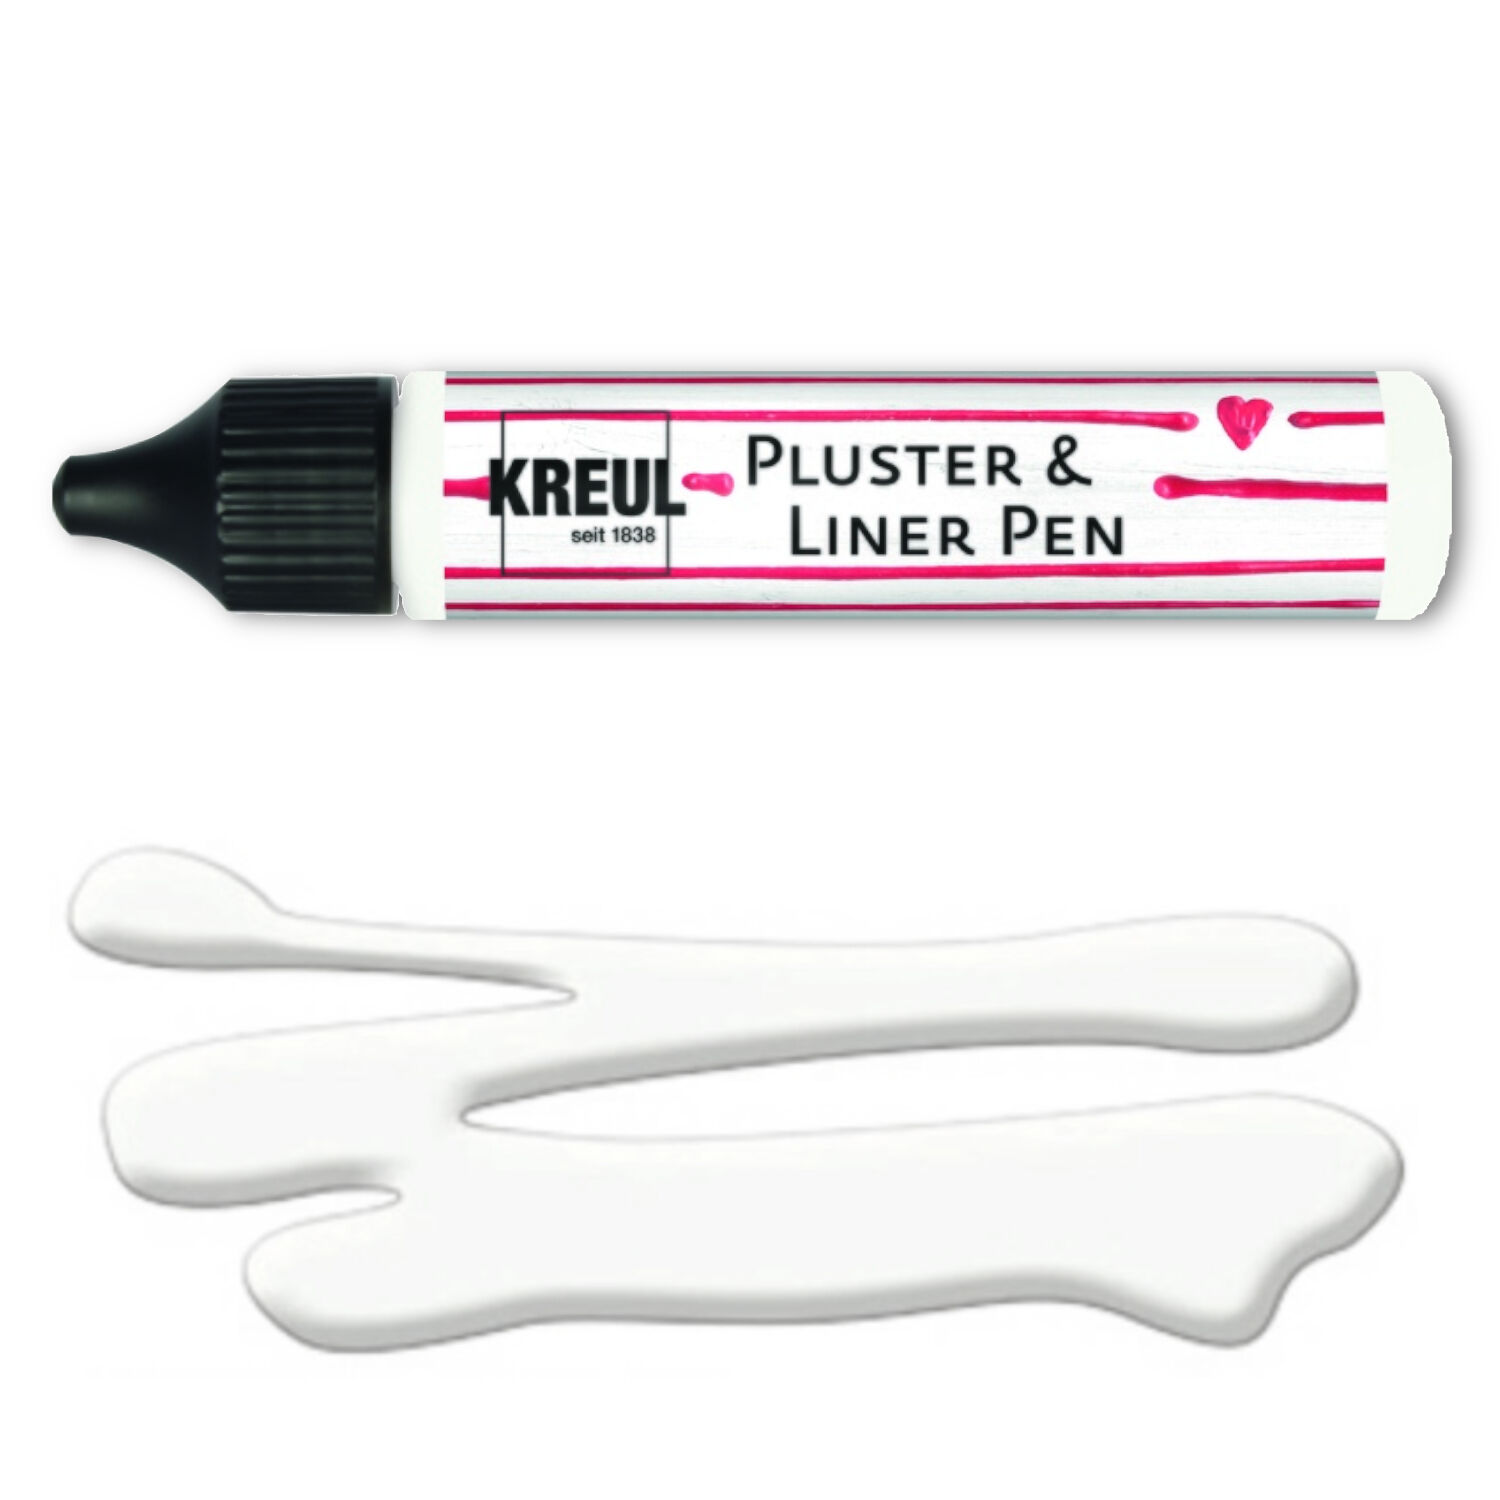 Kreul Pluster & Liner Pen, 29 ml, Wei